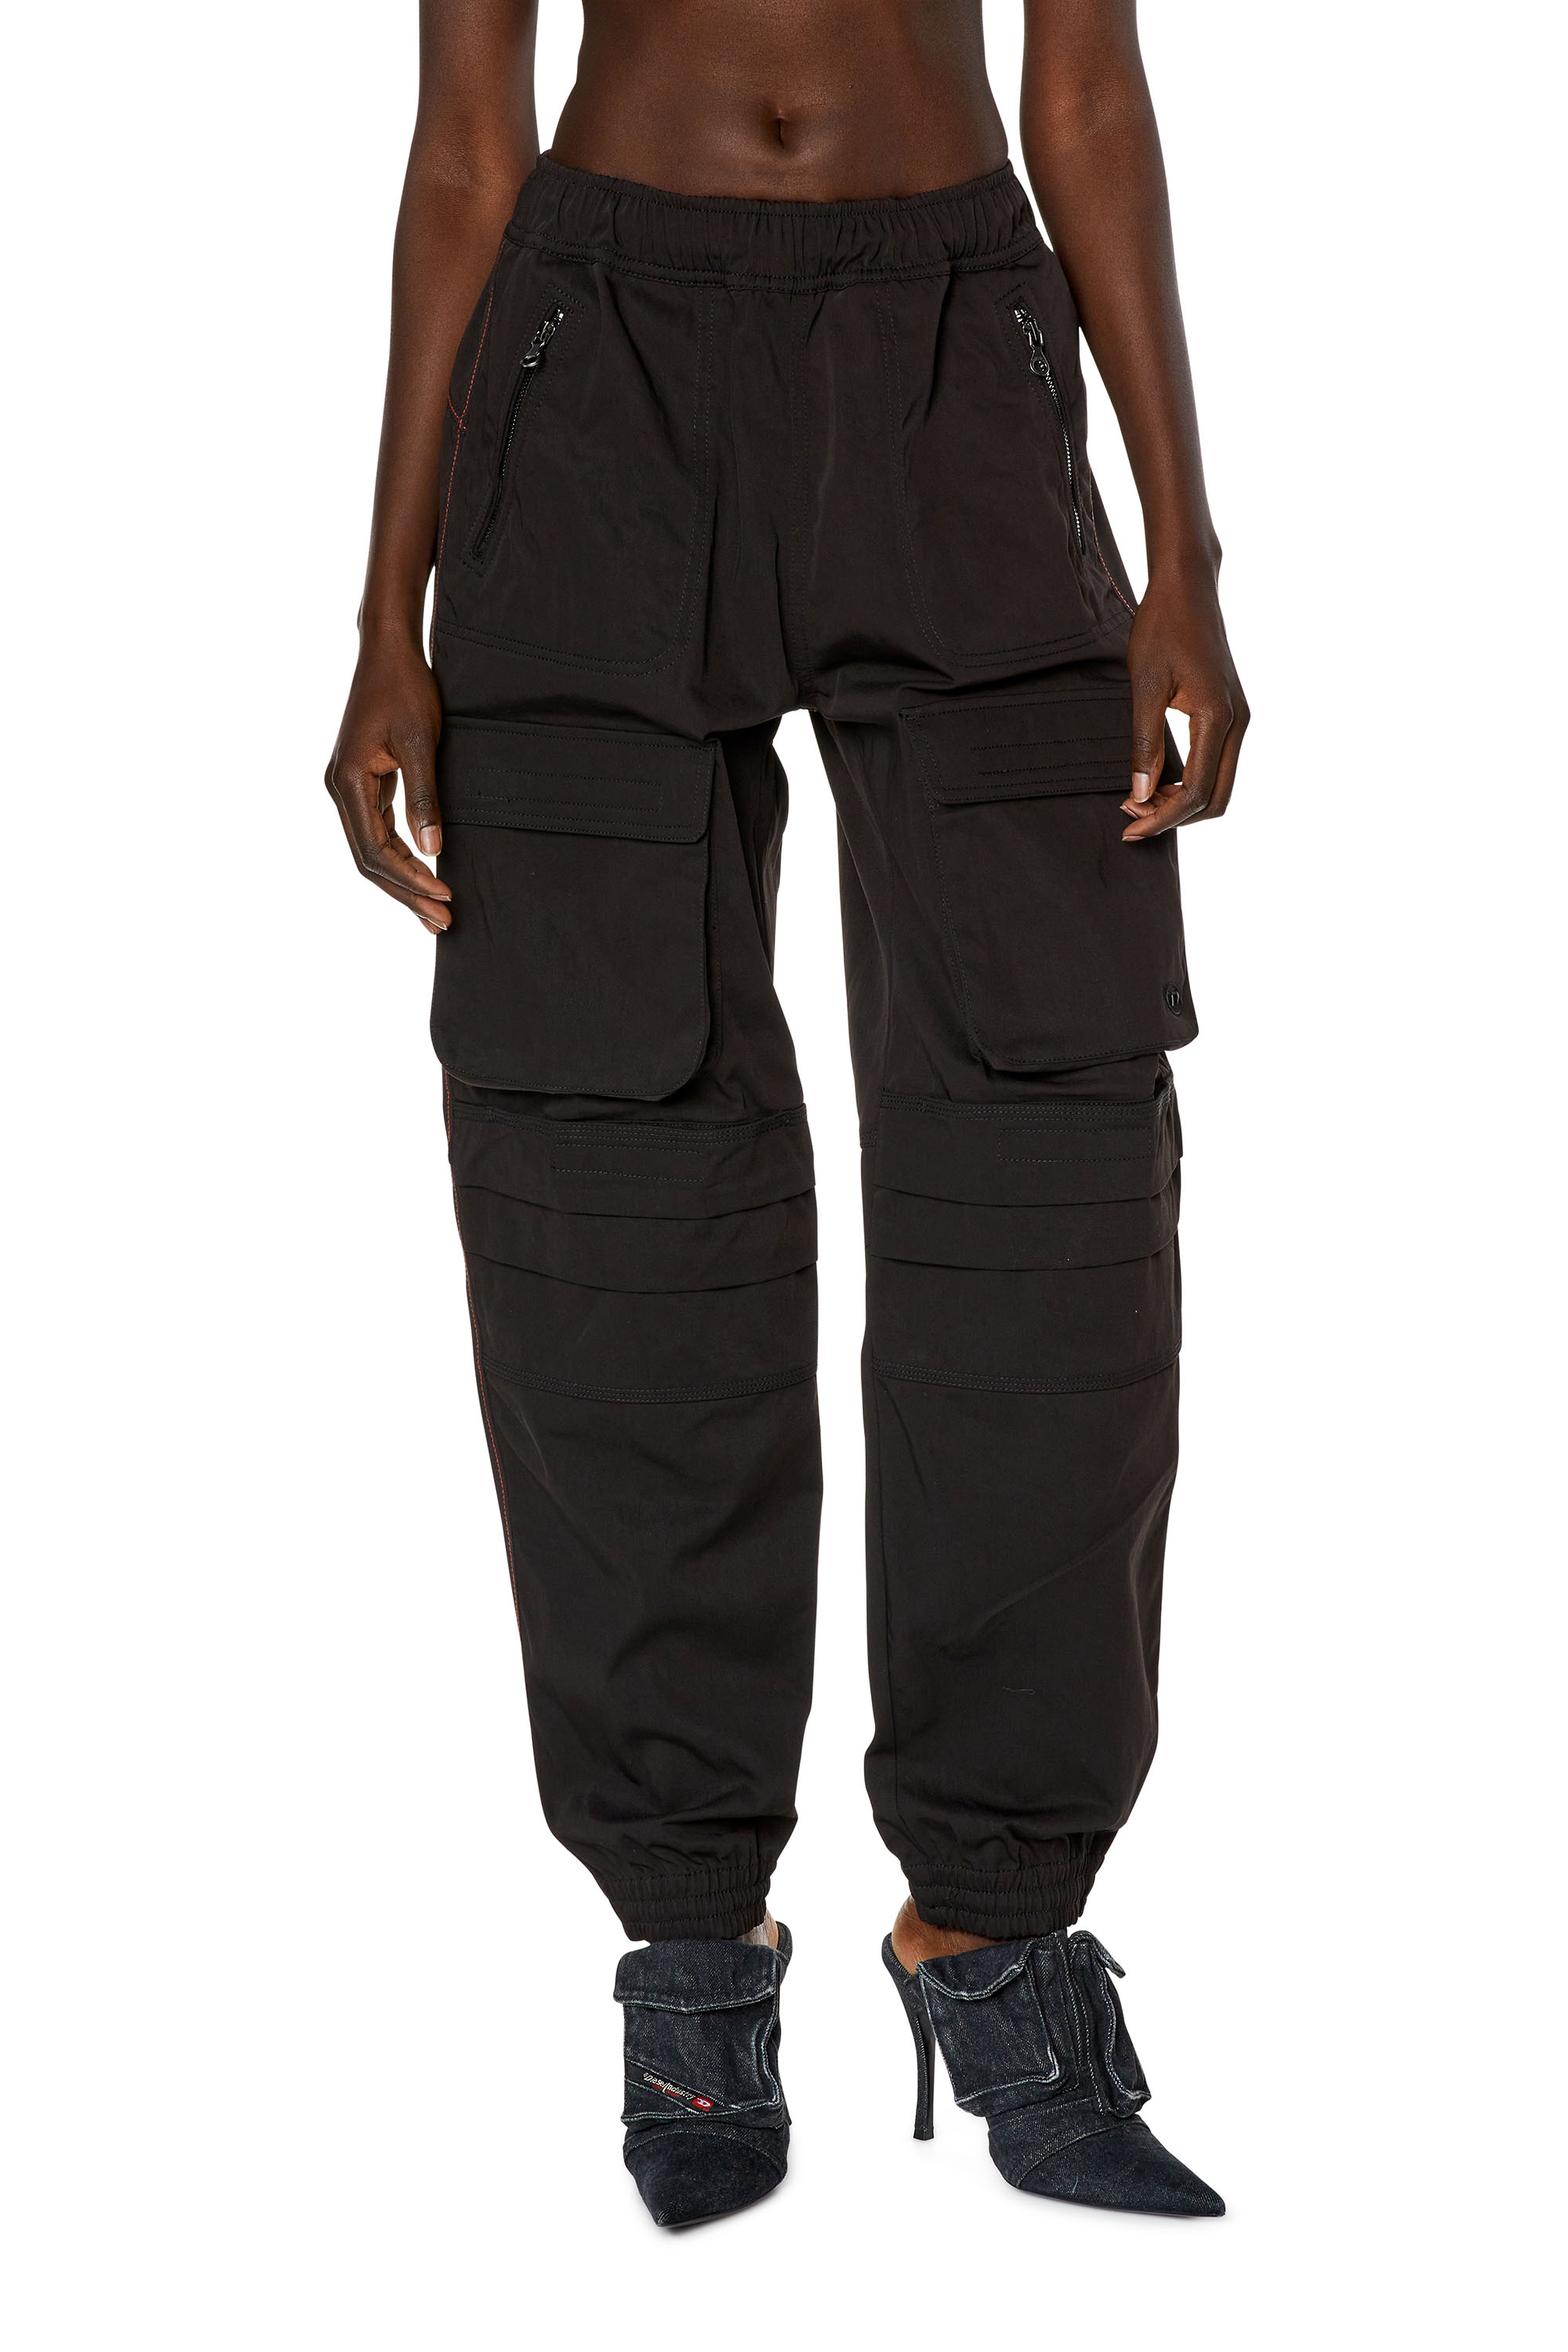 DYLL Adax Women 3/4 Length Cargo Capri Pants - Dark Grey Color